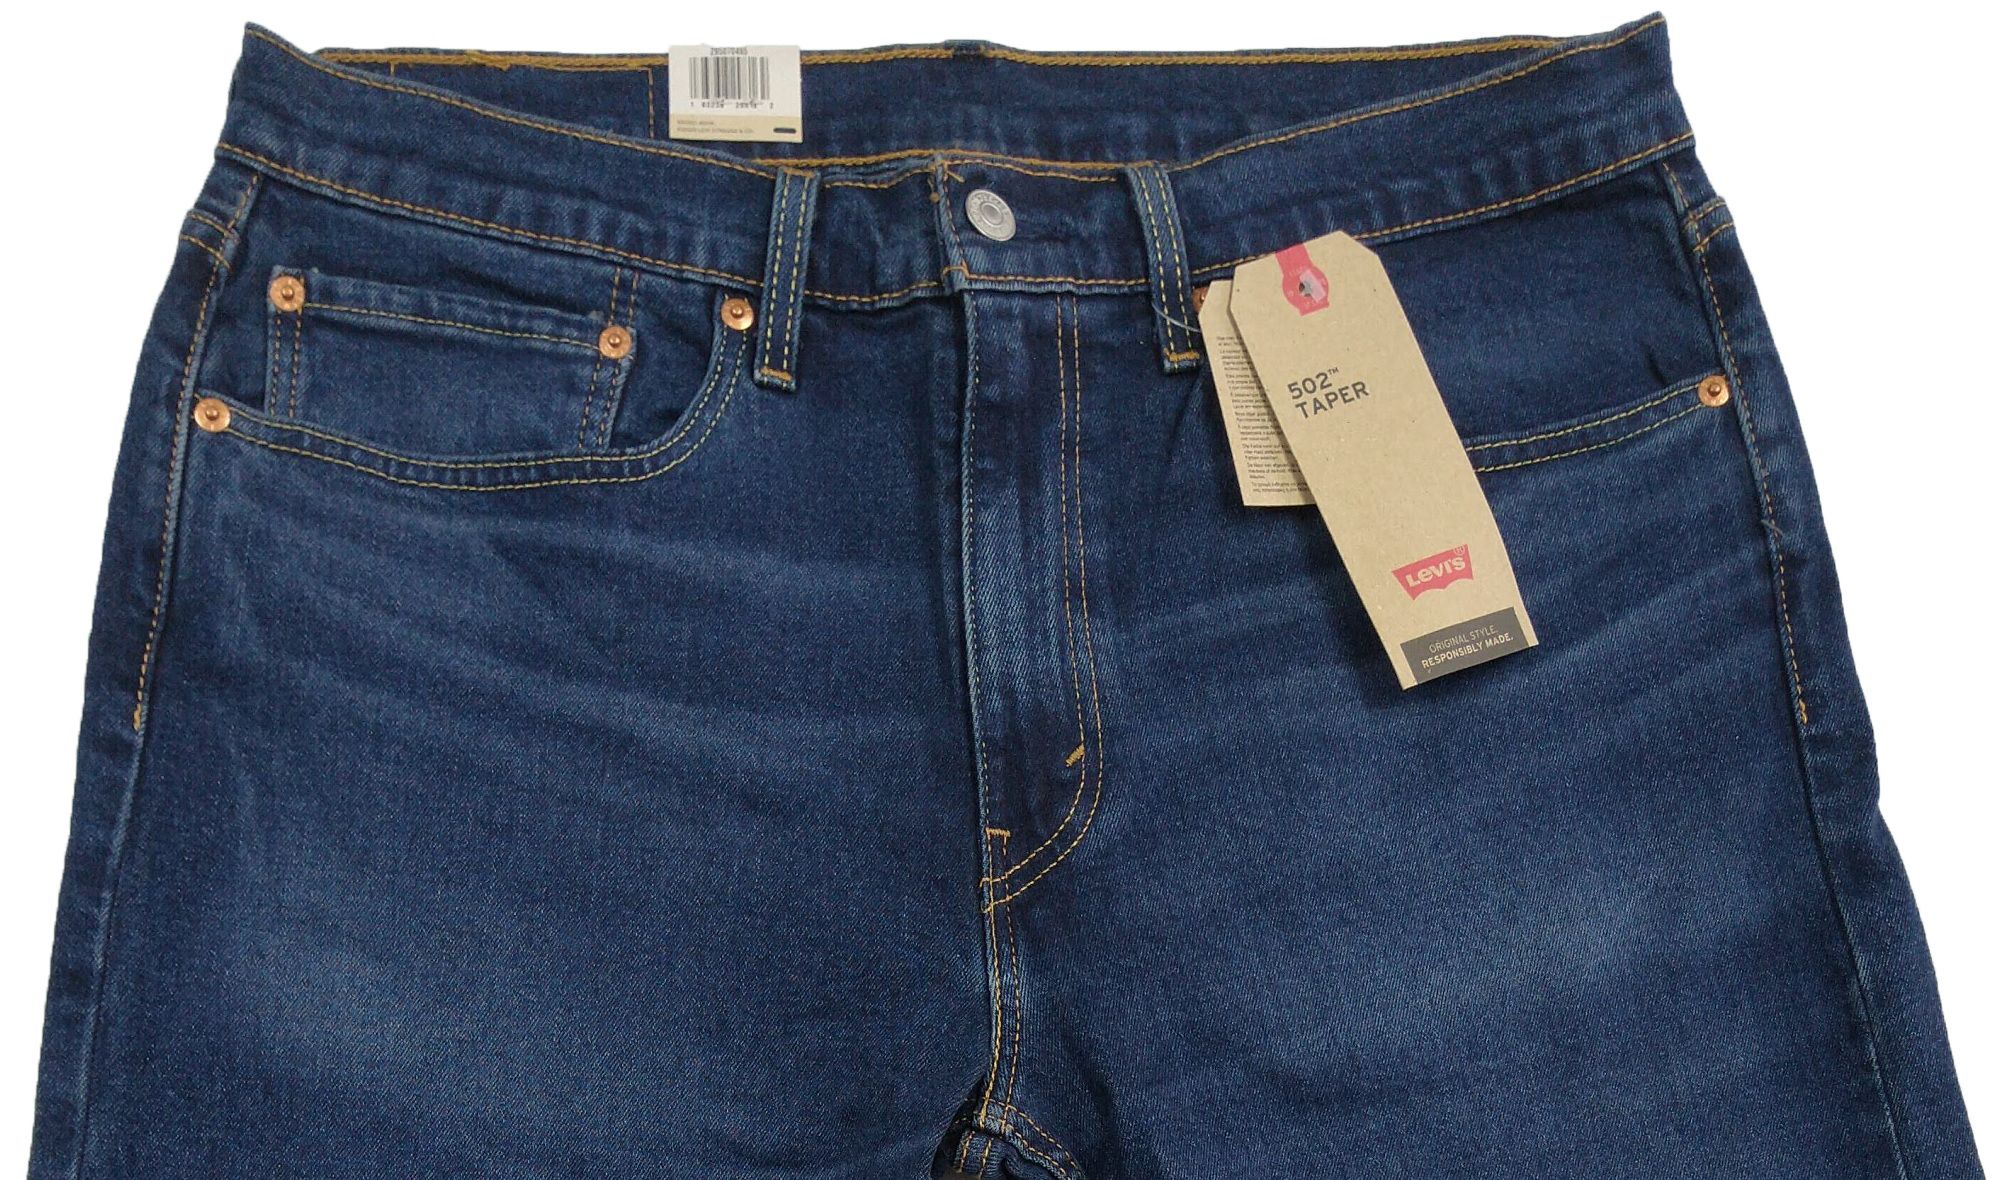 Calça Jeans Levis Masculina - Ref. 502-0495 Regular Taper - Boca Fina -  FIDALGOS